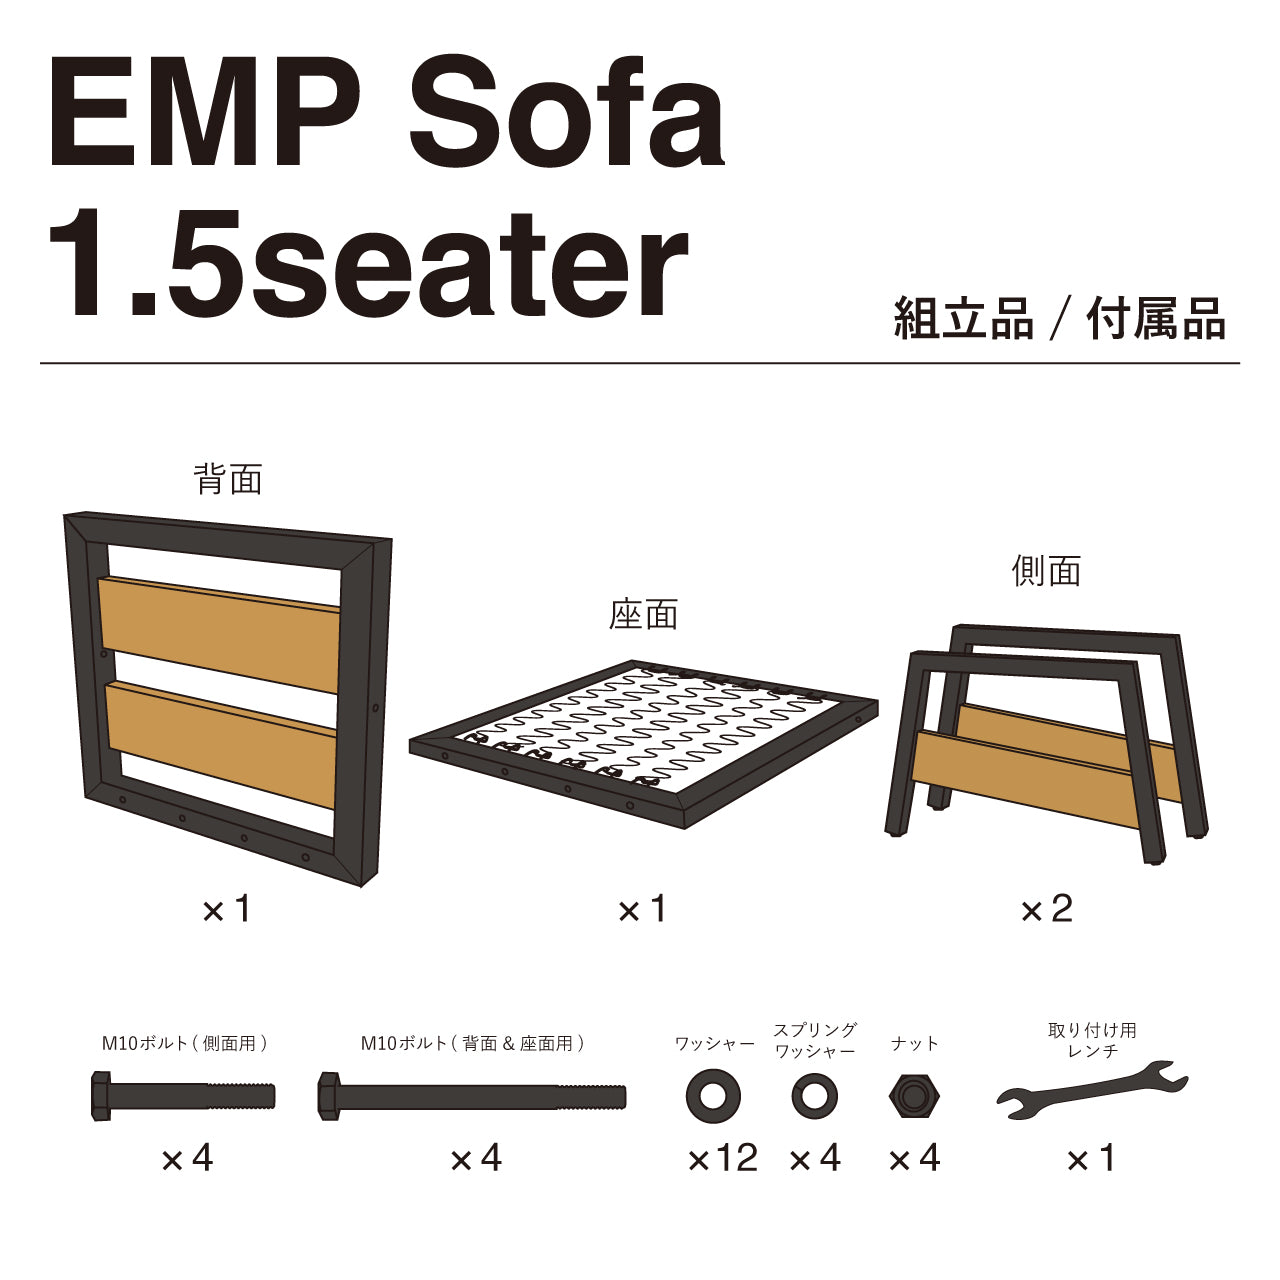 EMP Sofa 1.5Seater